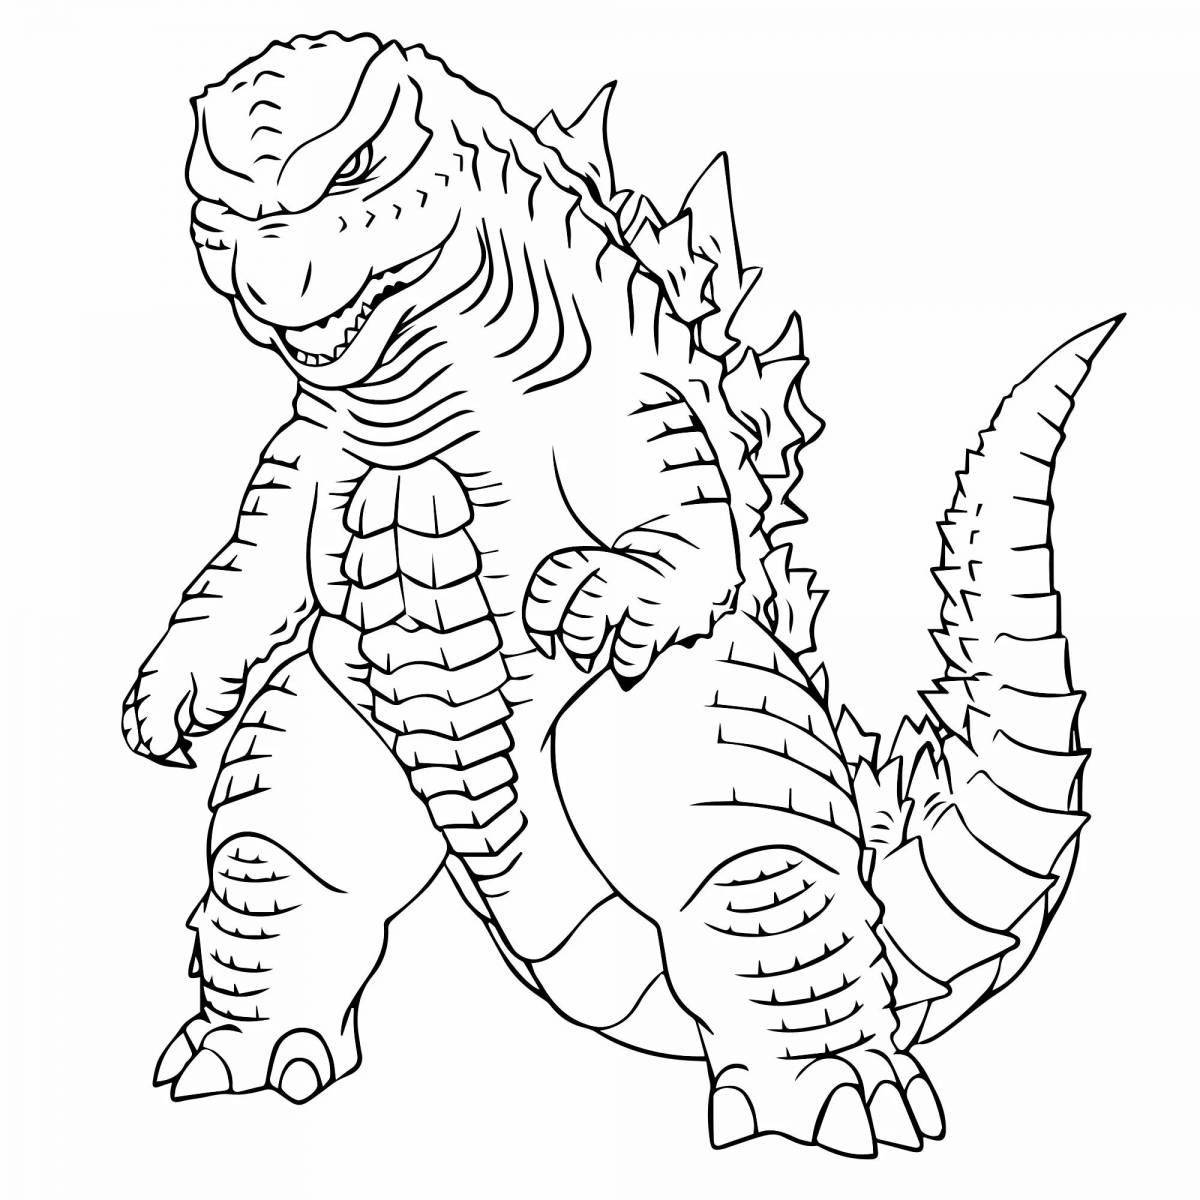 Godzilla's scary coloring page